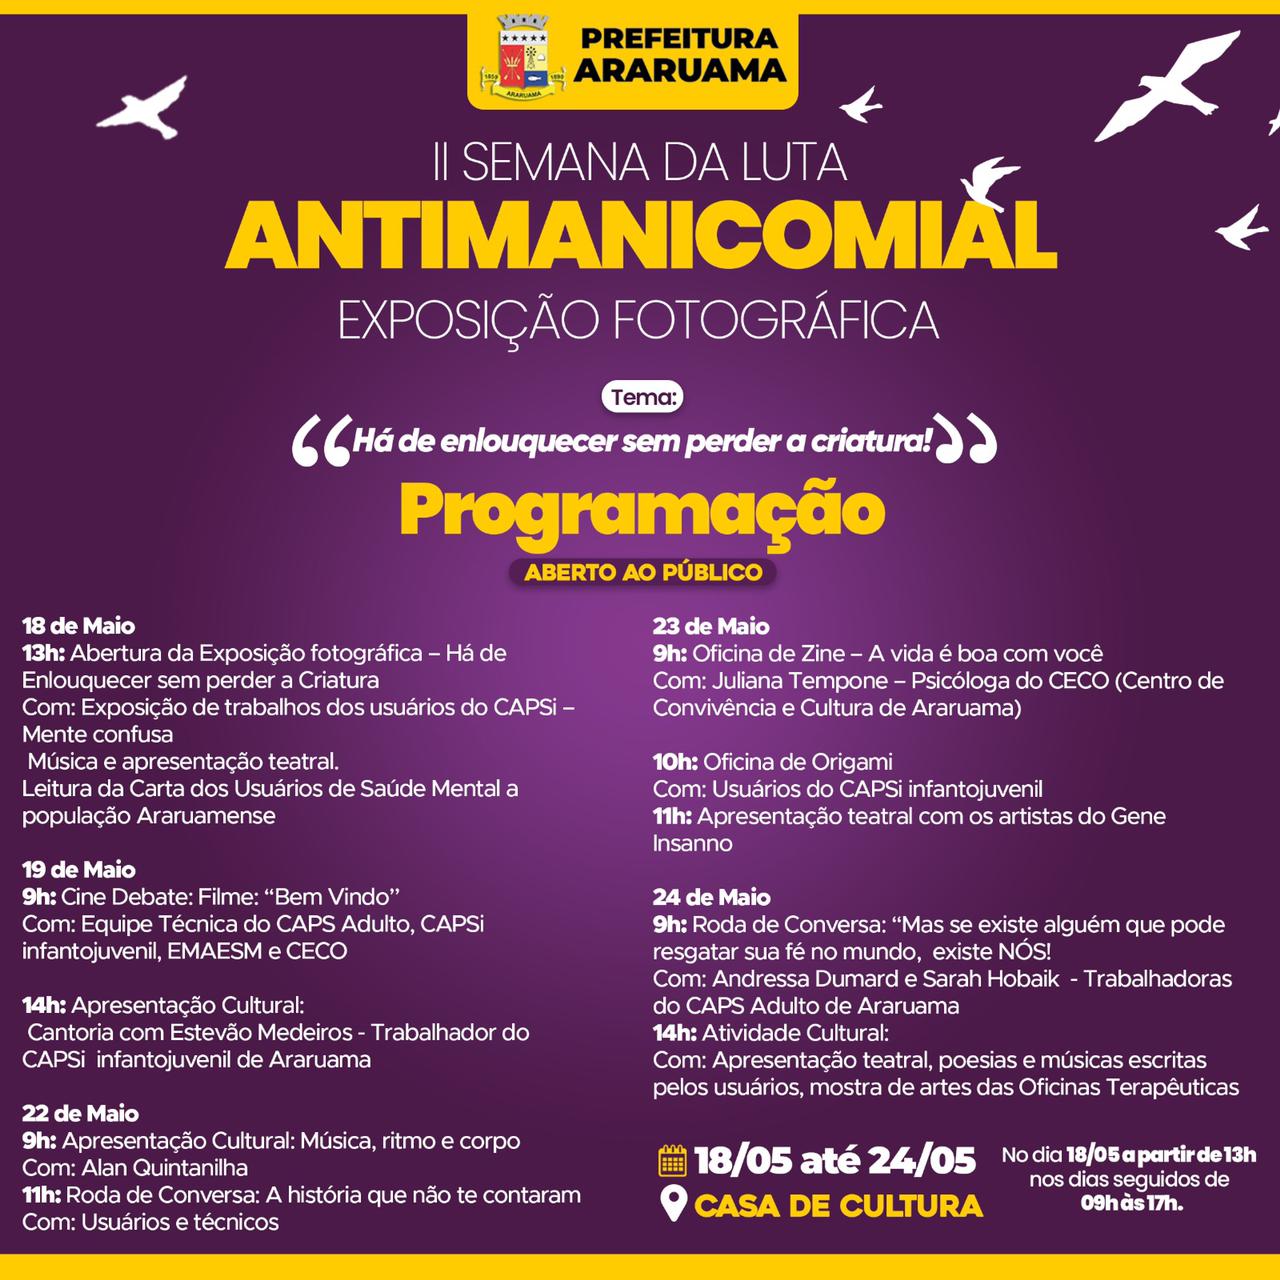 Prefeitura de Araruama vai realizar a II Semana da Luta Antimanicomial no município